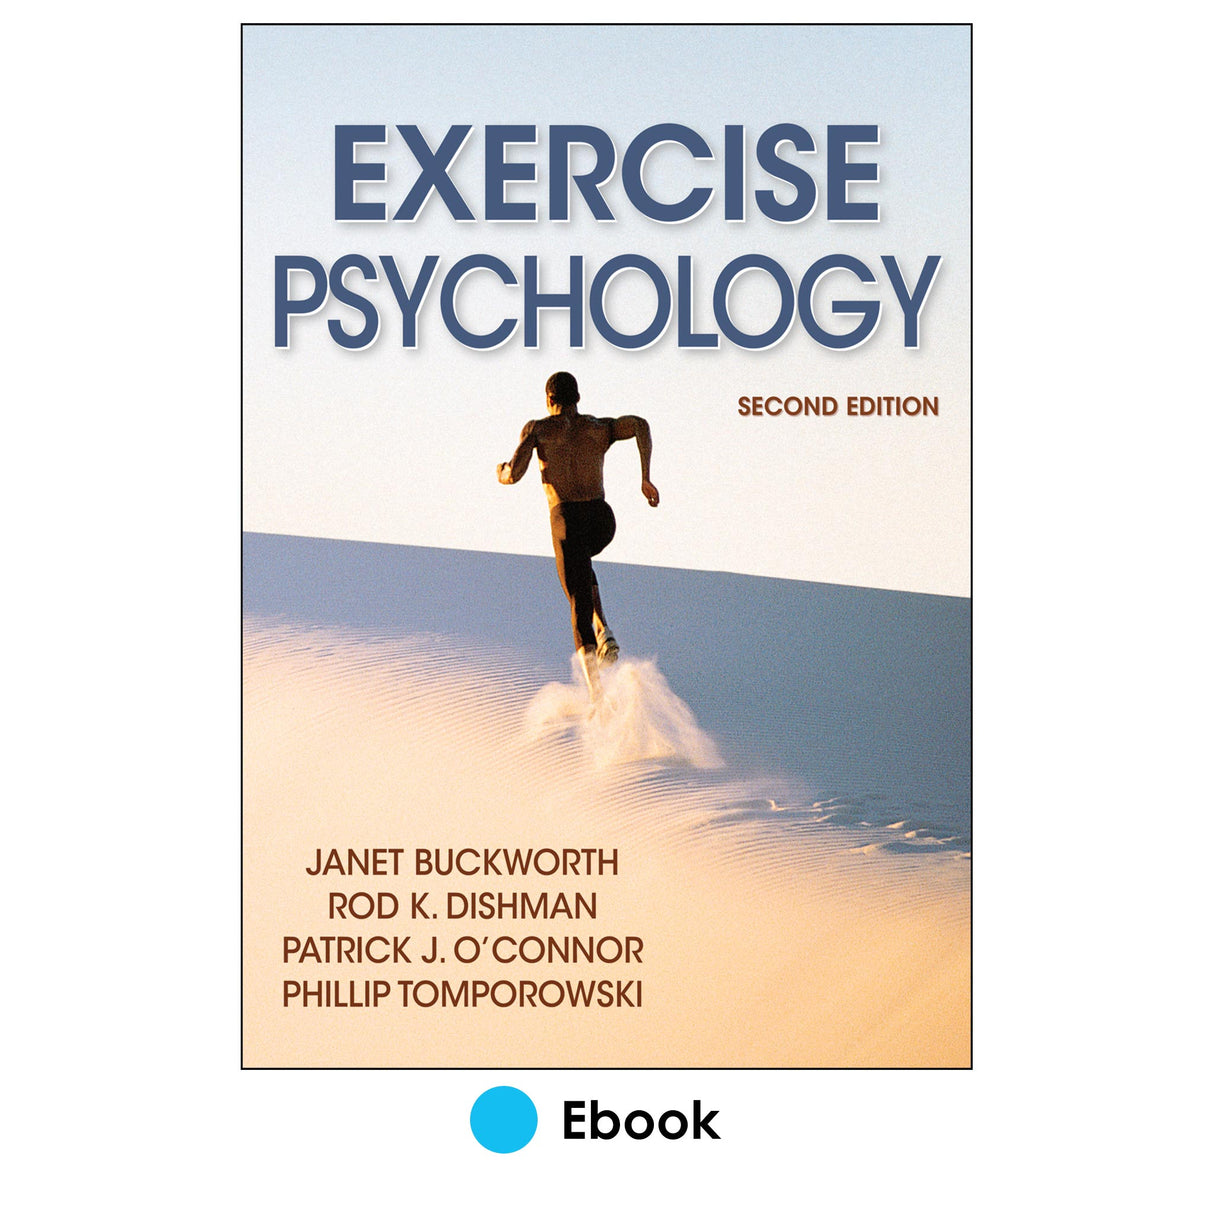 Exercise Psychology 2nd Edition PDF